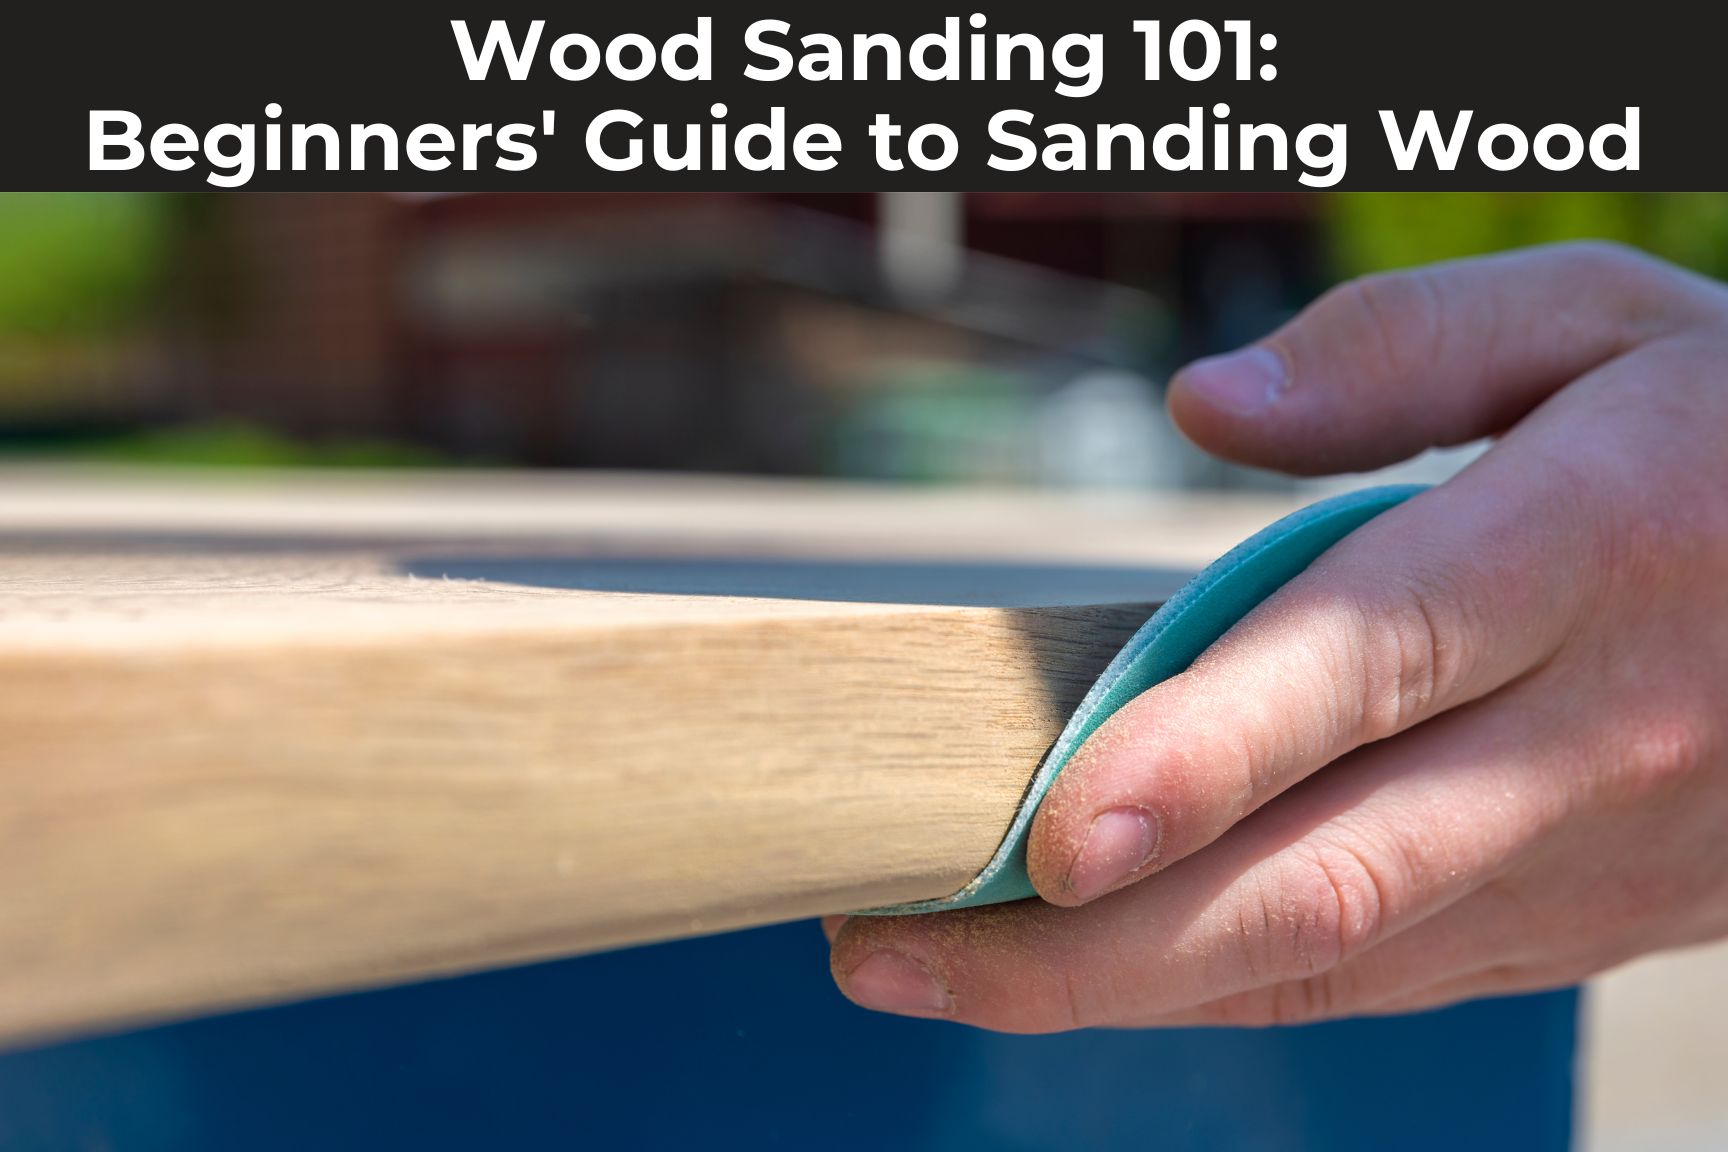 Wood Sanding 101 - Beginners' Guide to Sanding Wood - Empire Abrasives